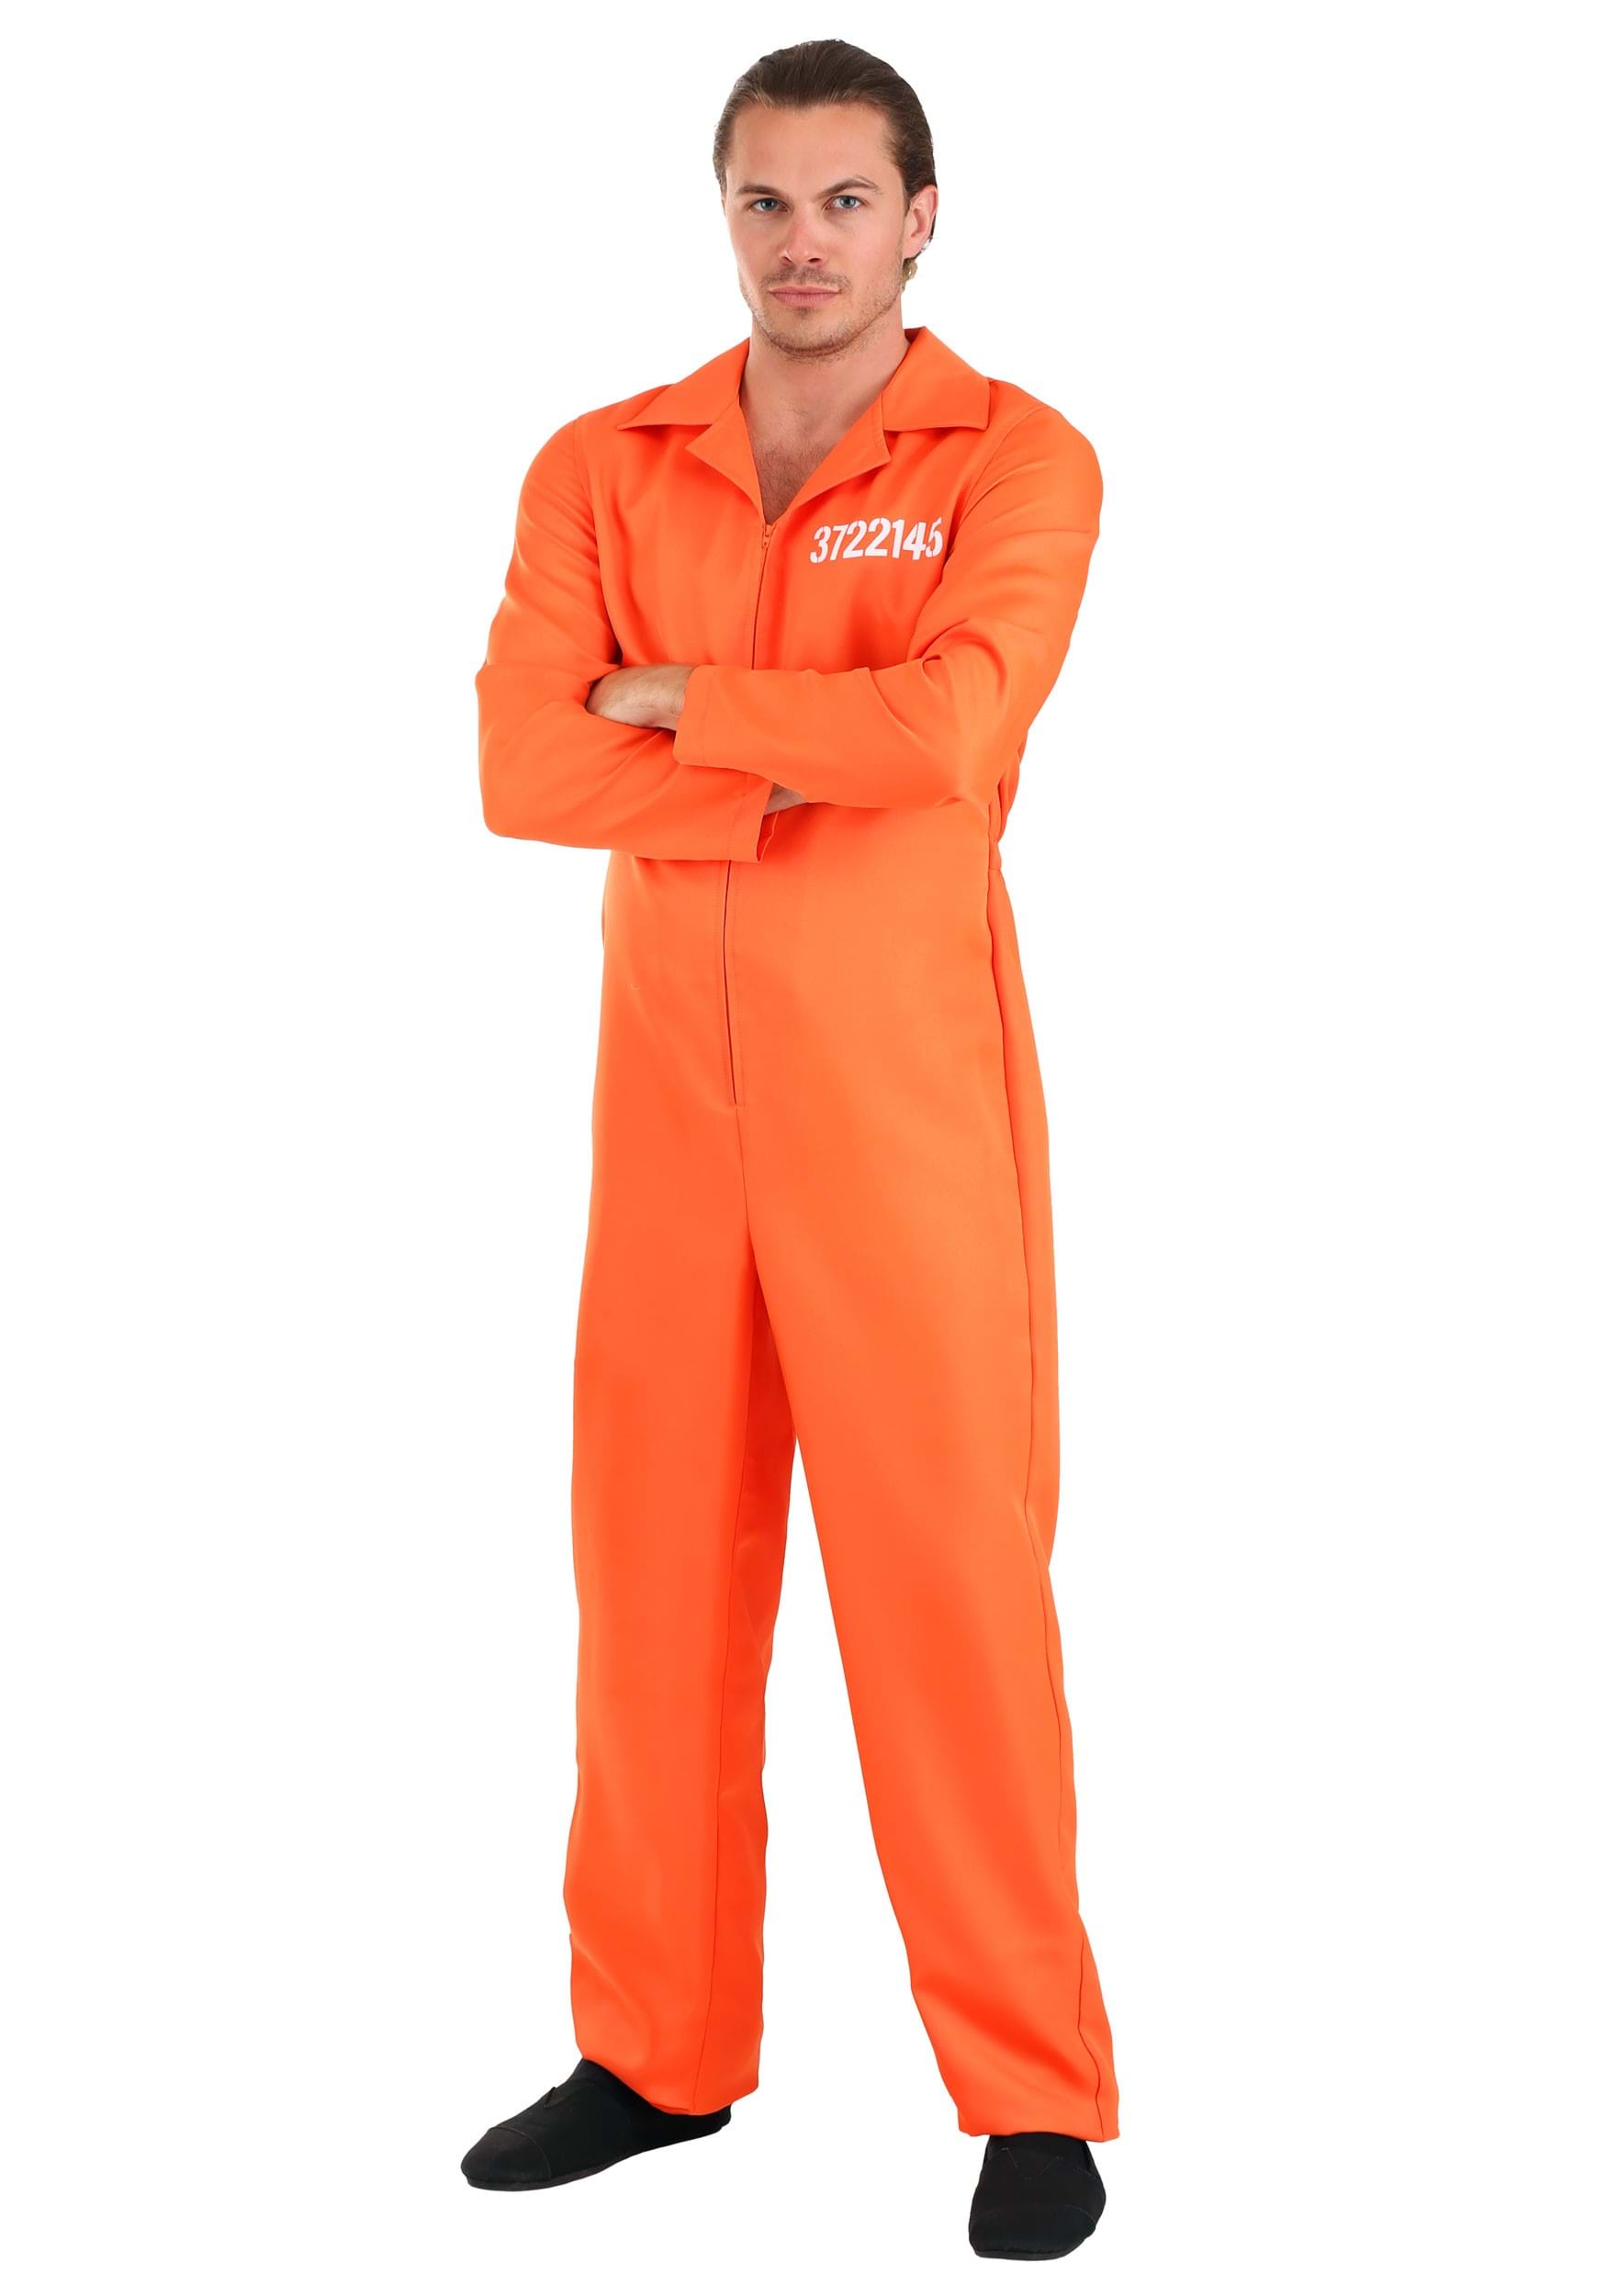 Men’s Prison Orange Jumpsuit